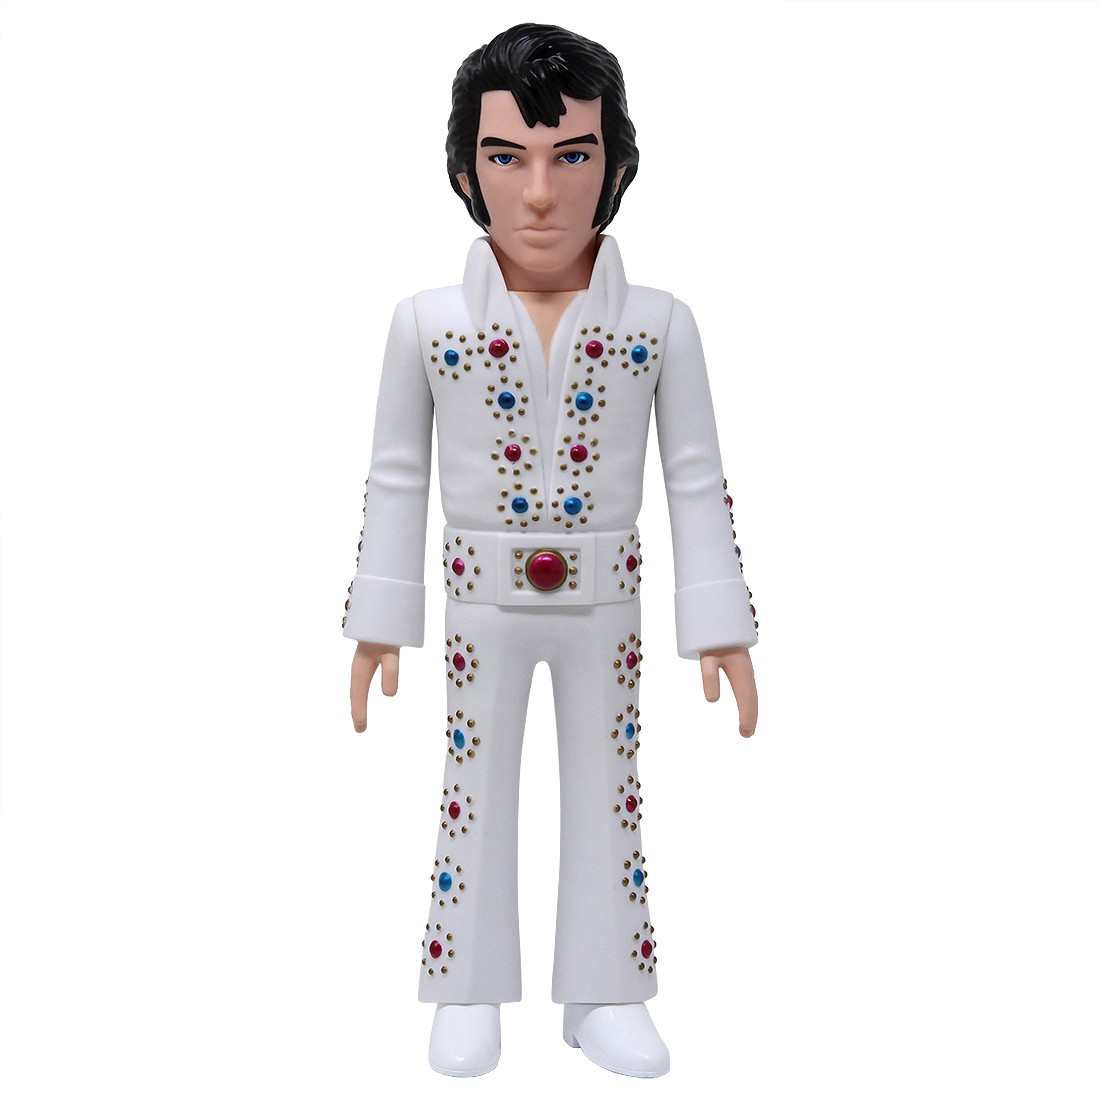 Medicom VCD Elvis Presley Figure (white)